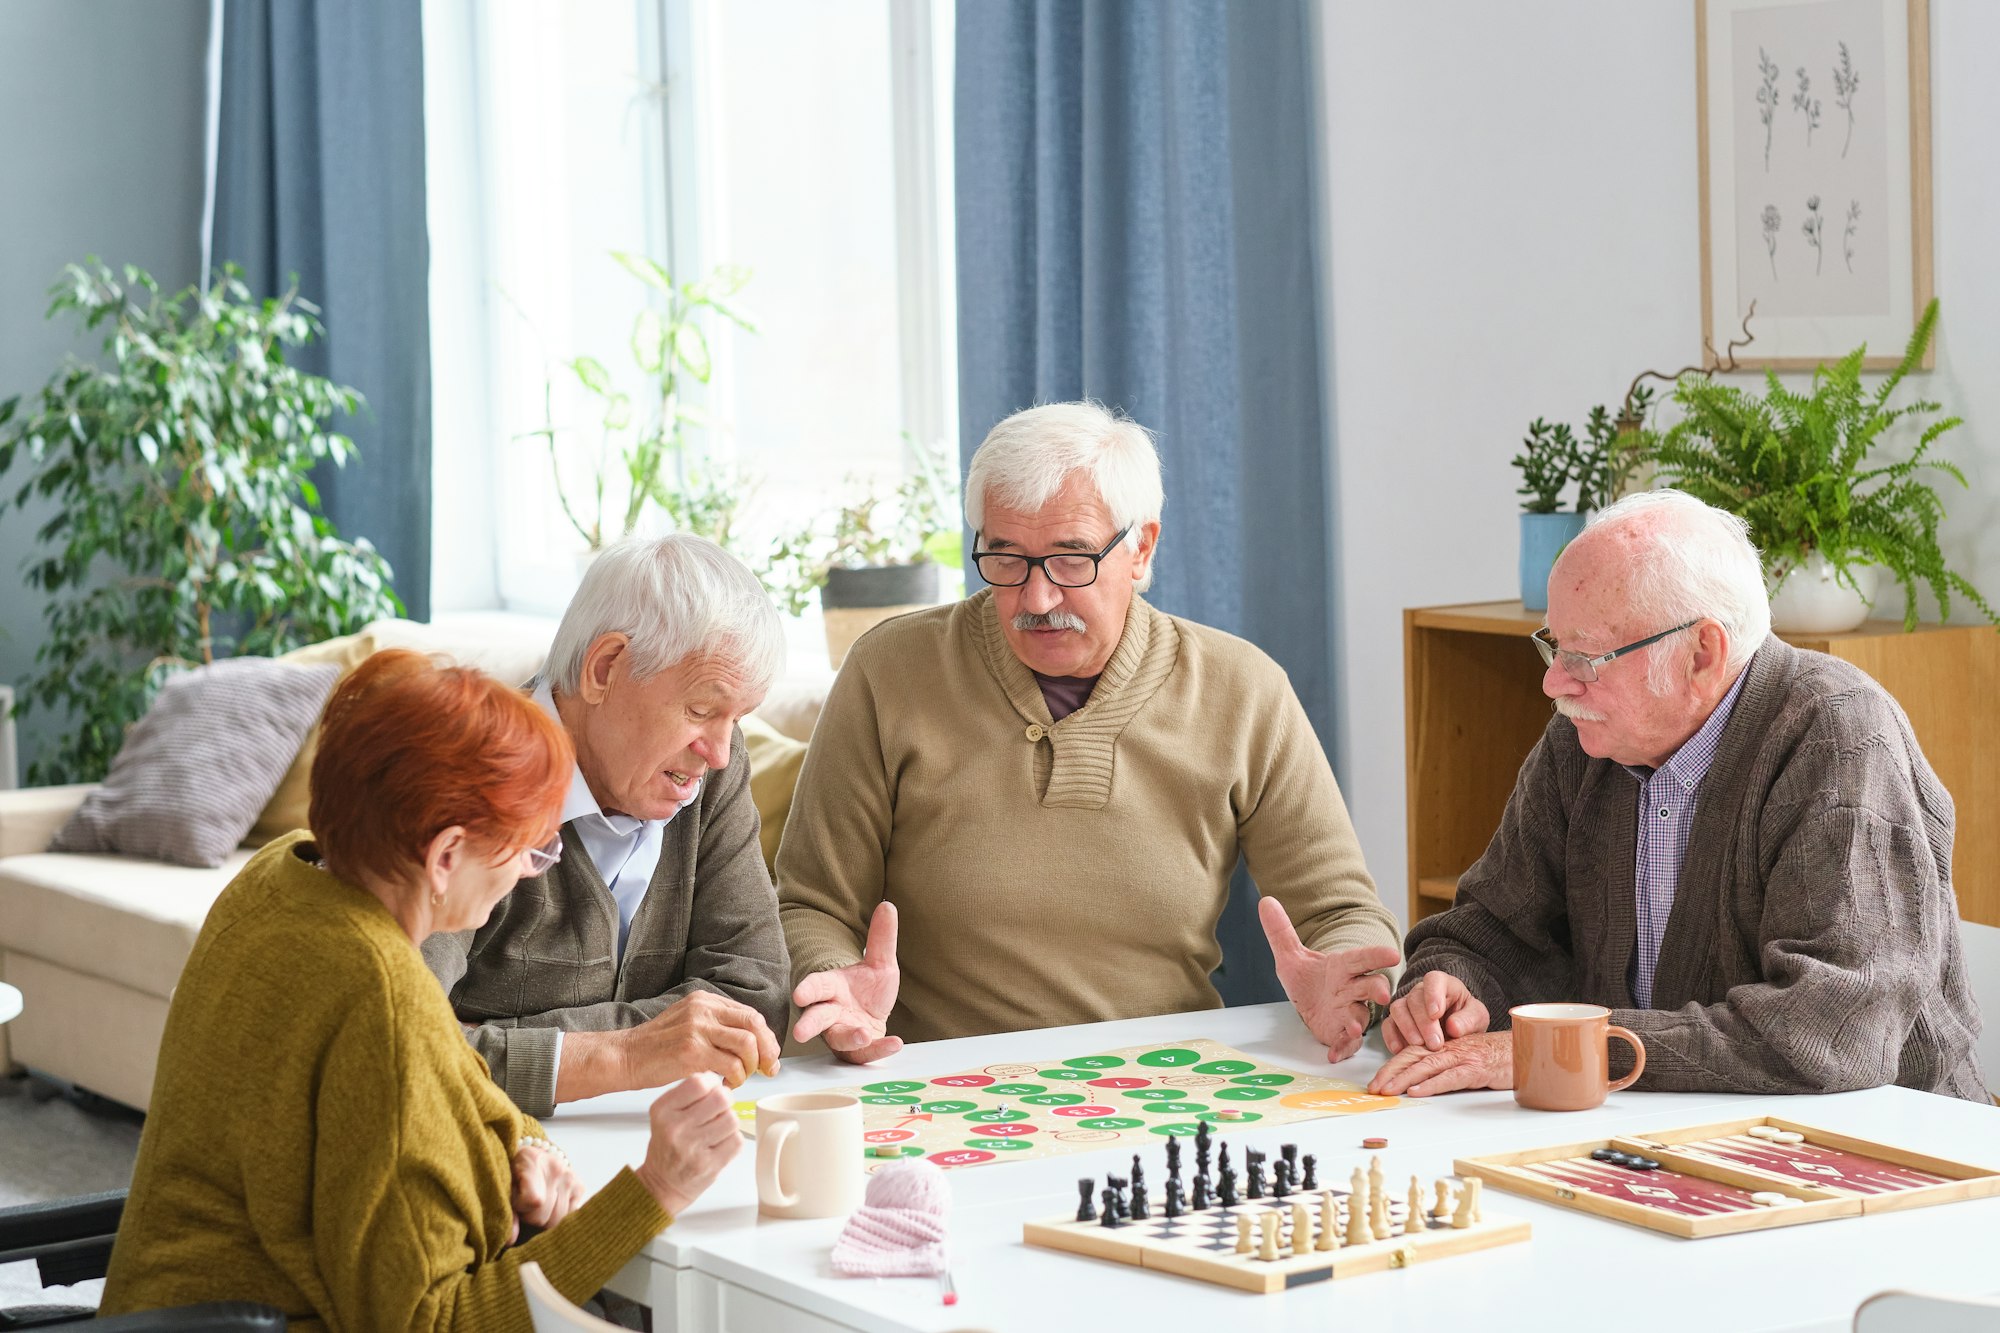 Elderly people playing board game